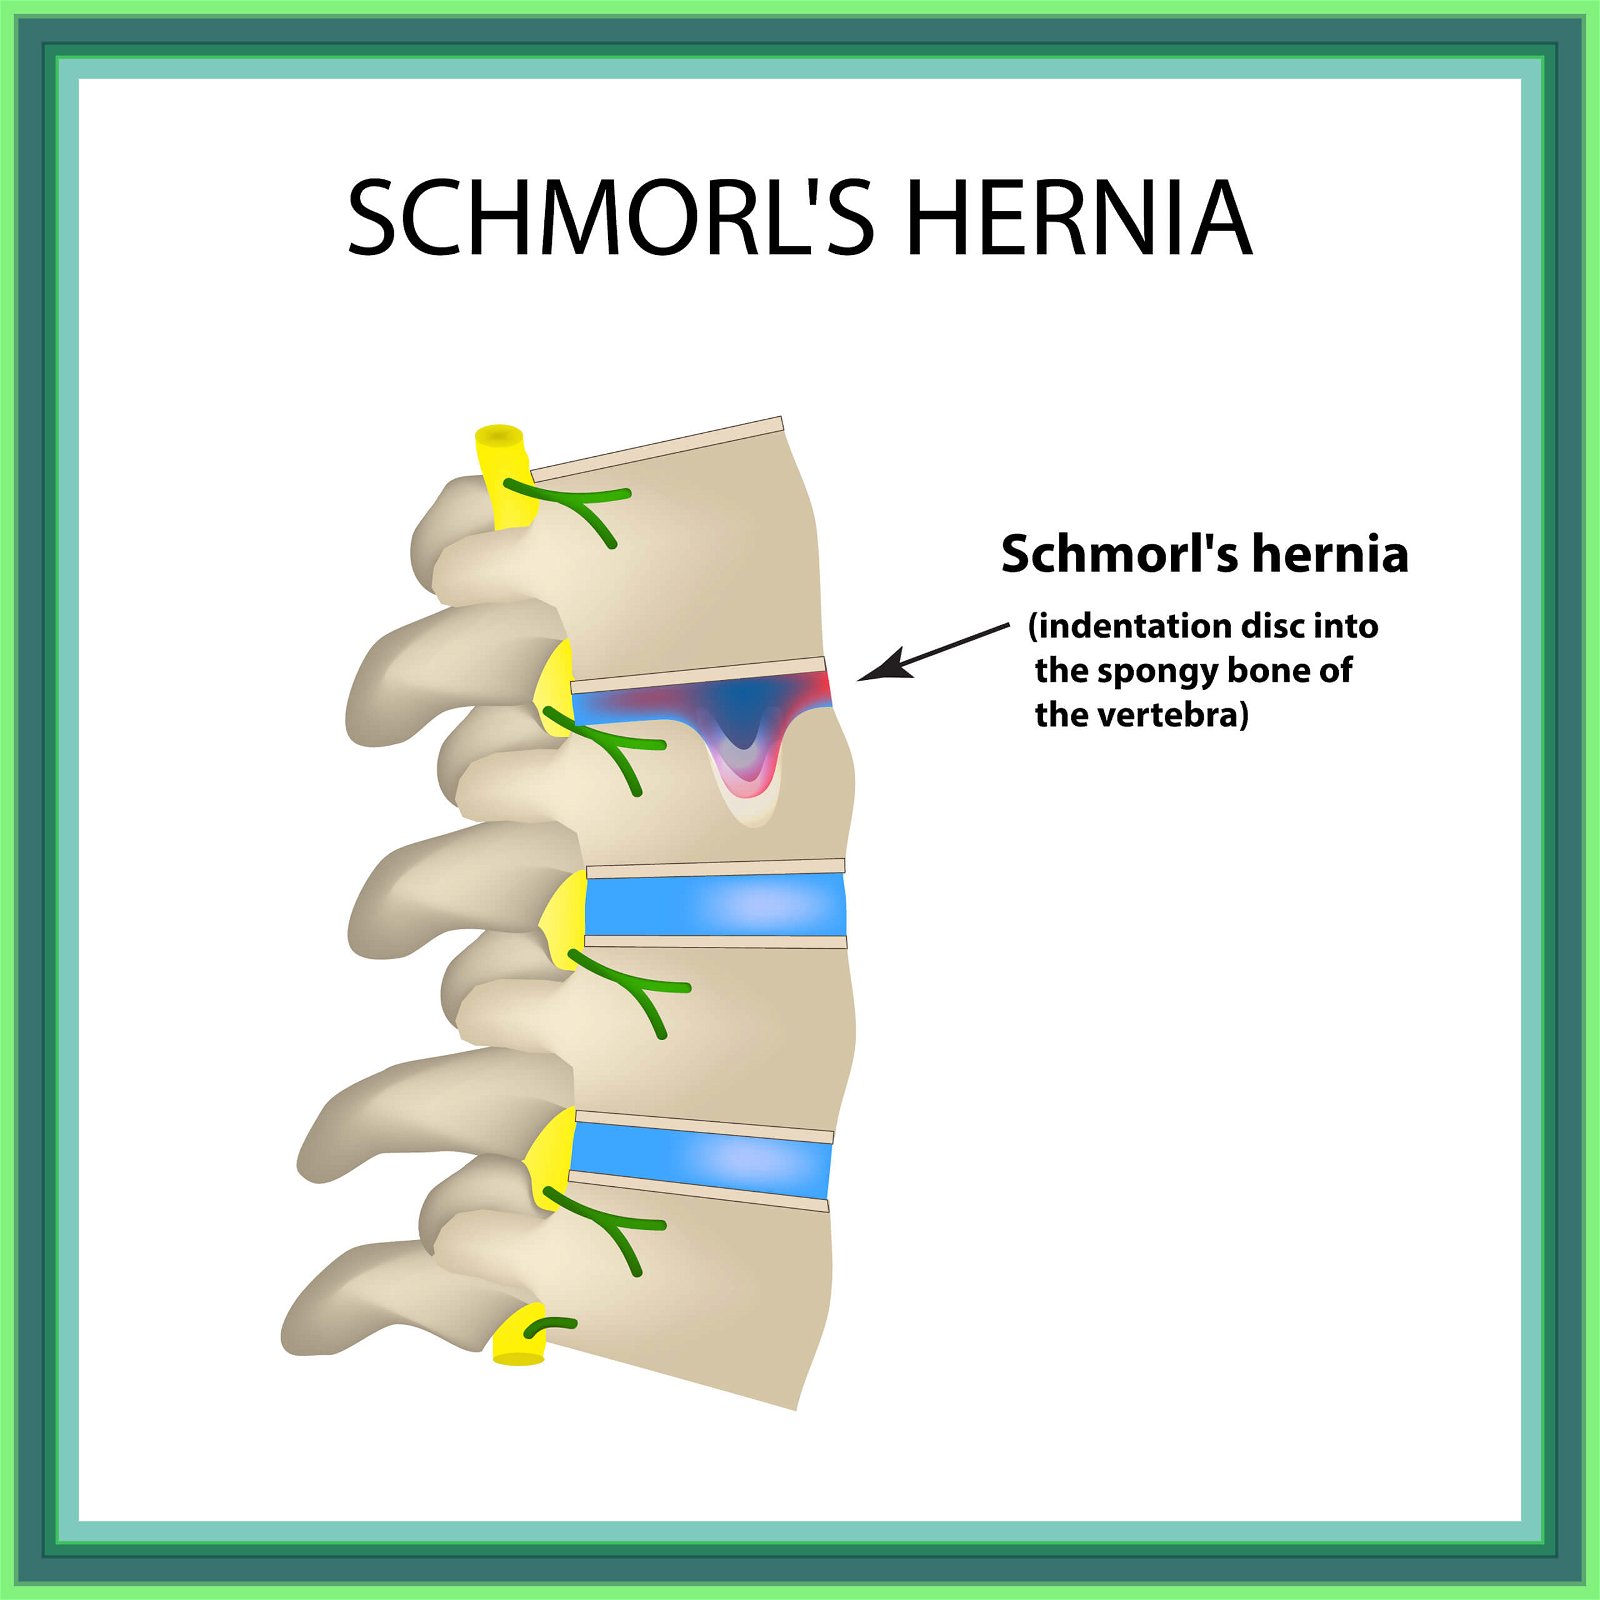 schmorls hernia infographic